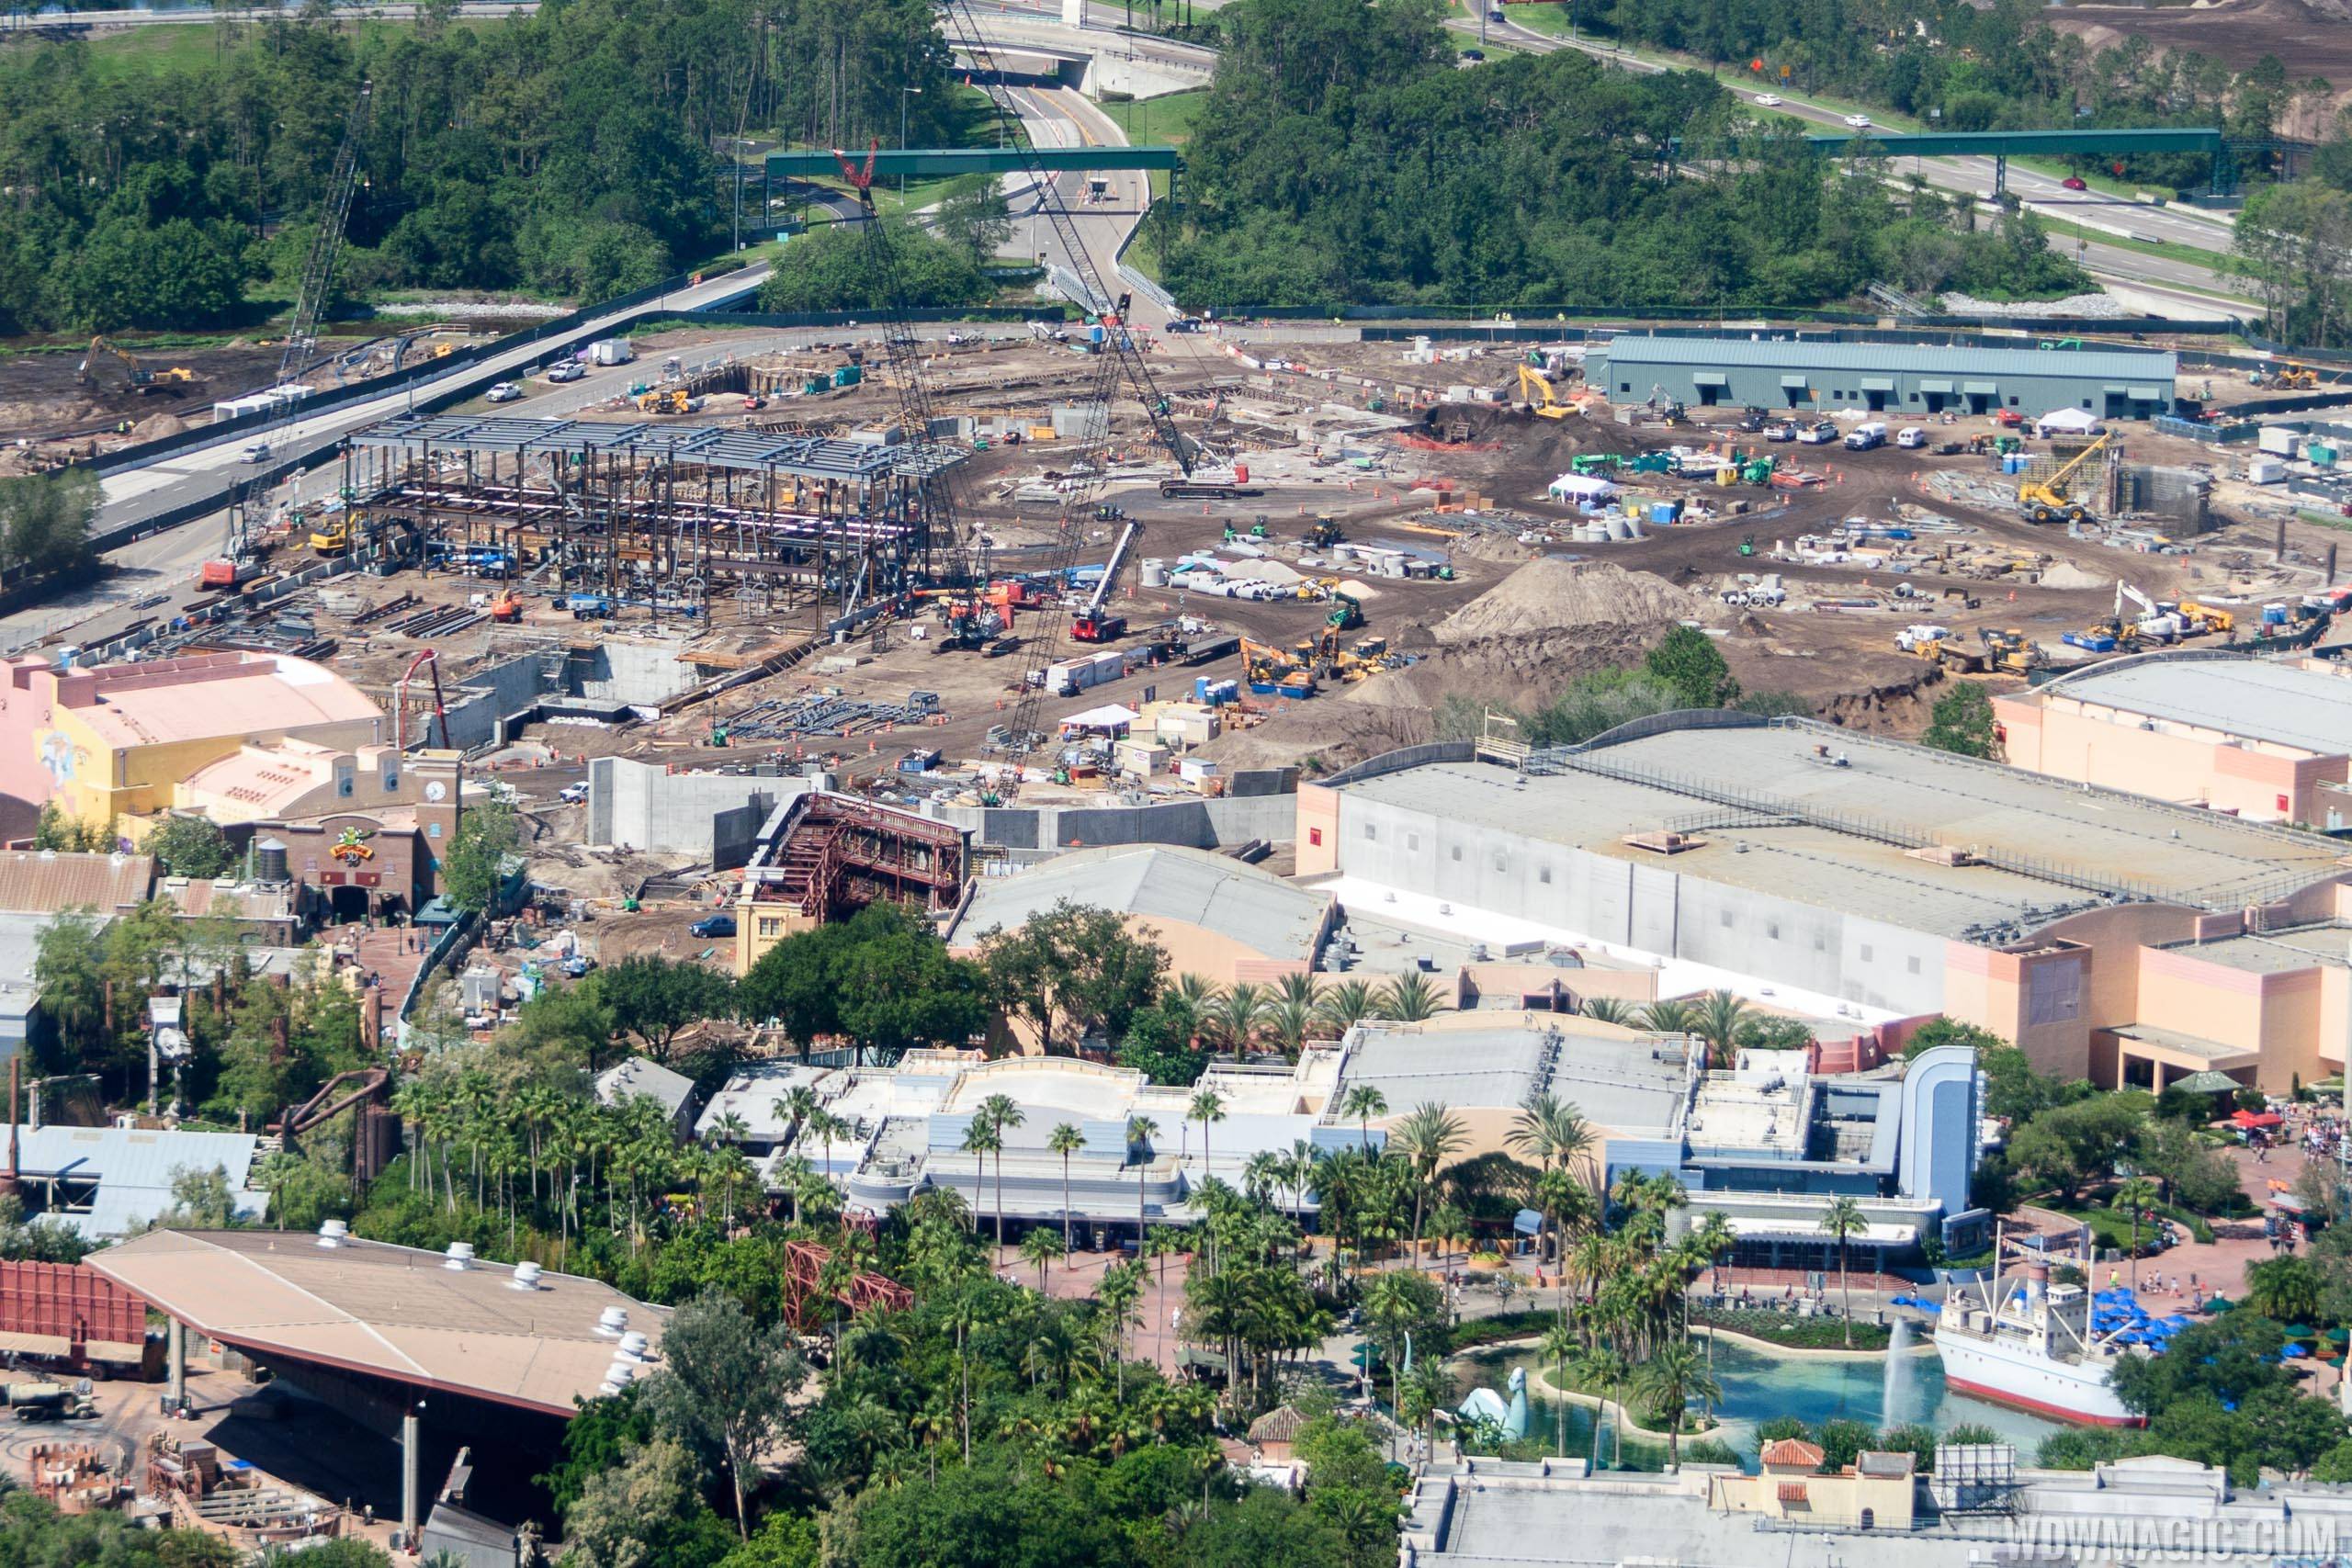 PHOTOS - Aerial views of Star Wars Land construction at Disney's Hollywood Studios